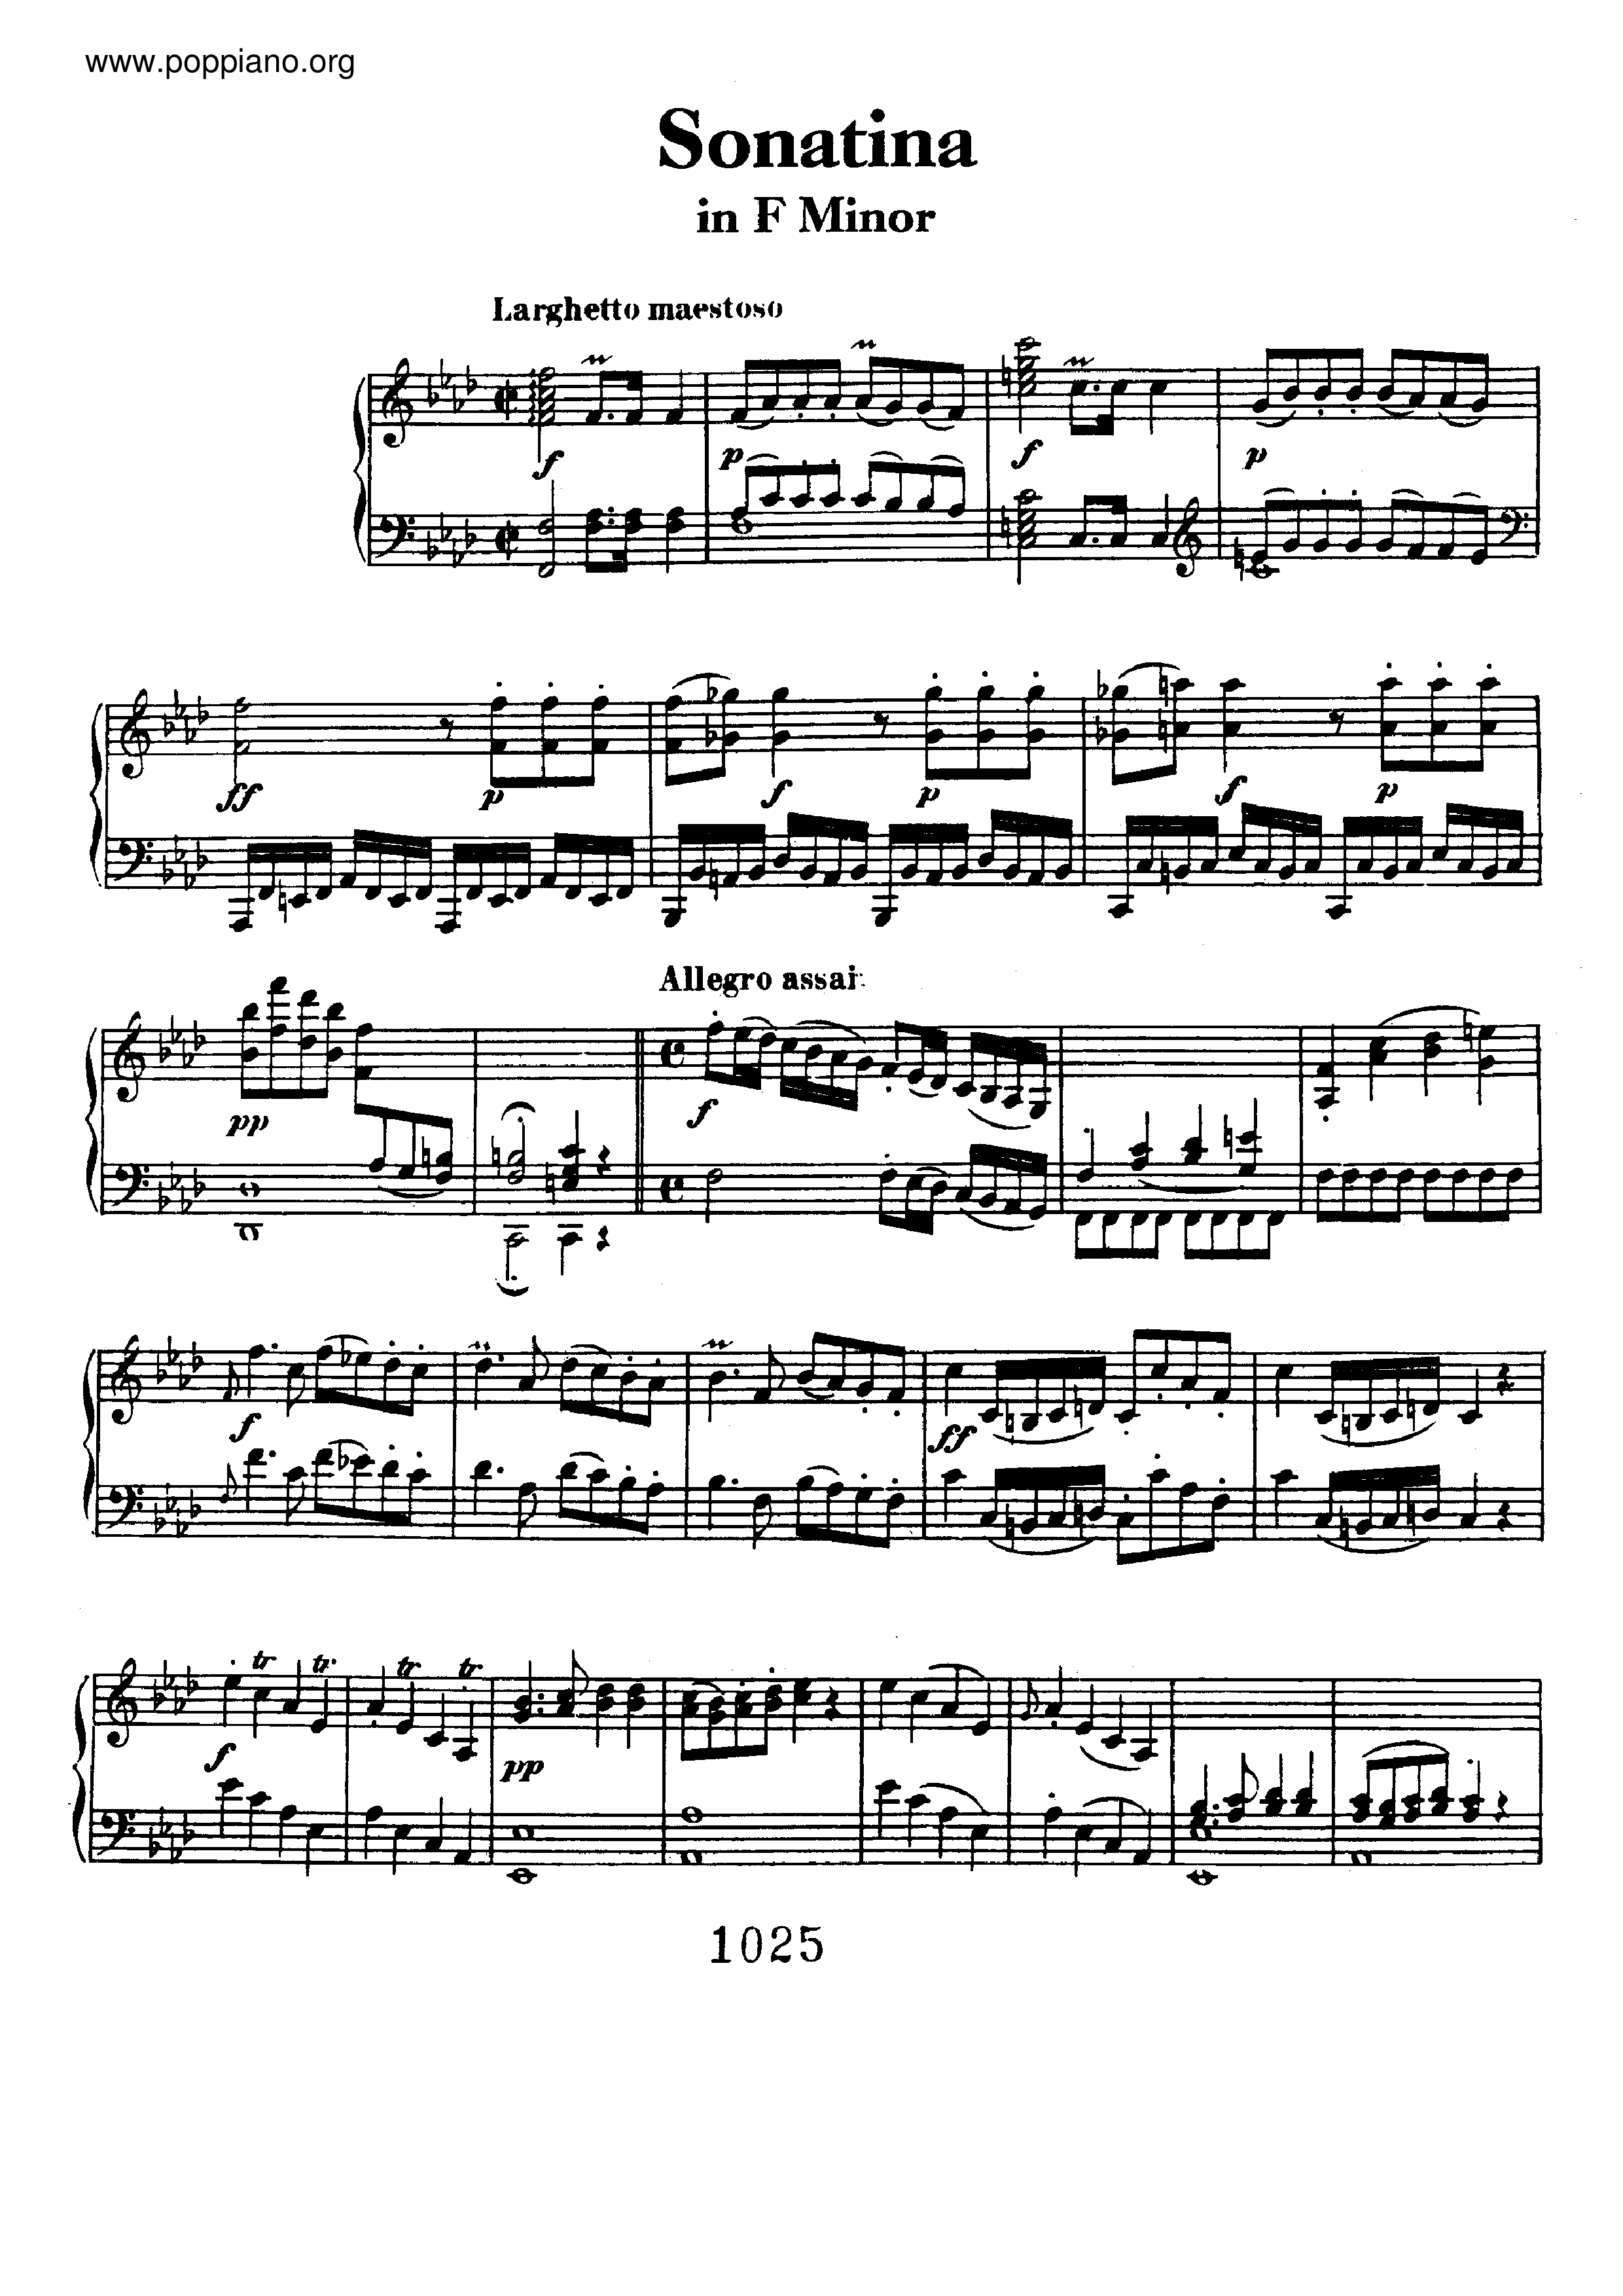 Sonatina in F minorピアノ譜